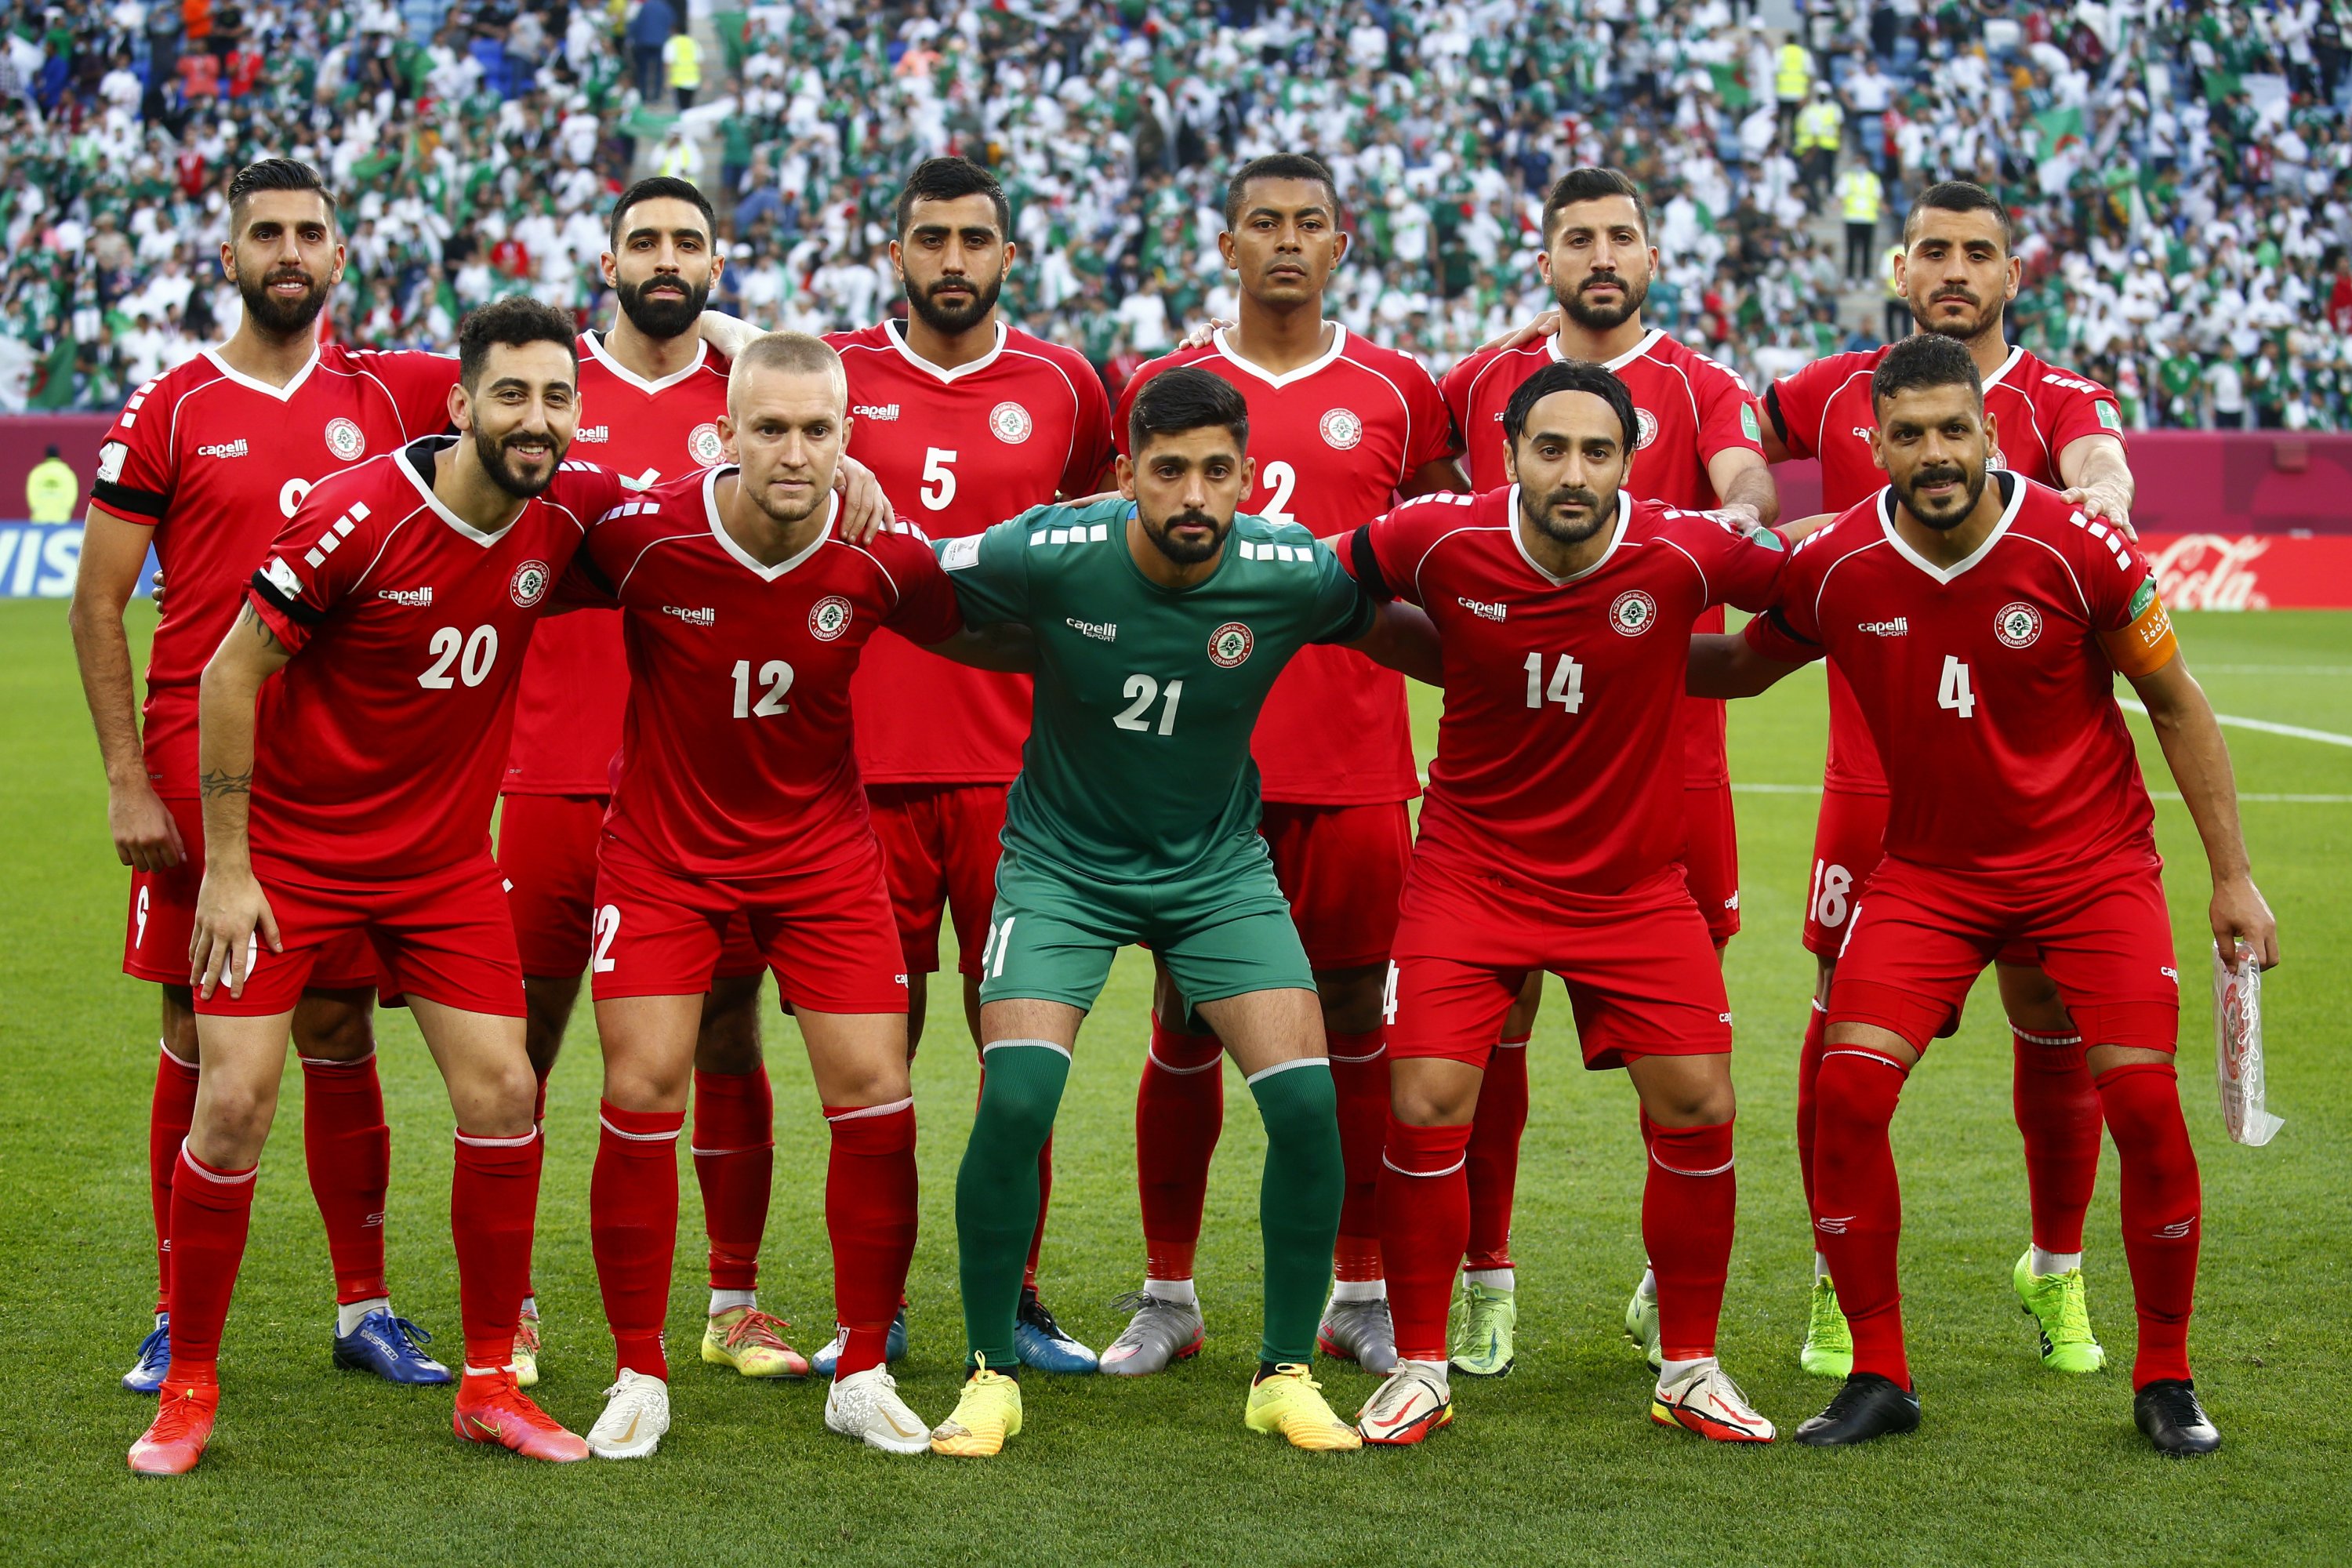 Lebanon players pose for a team group photo before the match against Algeria at the Al-Janoub Stadium, al-Wakrah, Qatar, Dec. 4, 2021. (Reuters Photo)